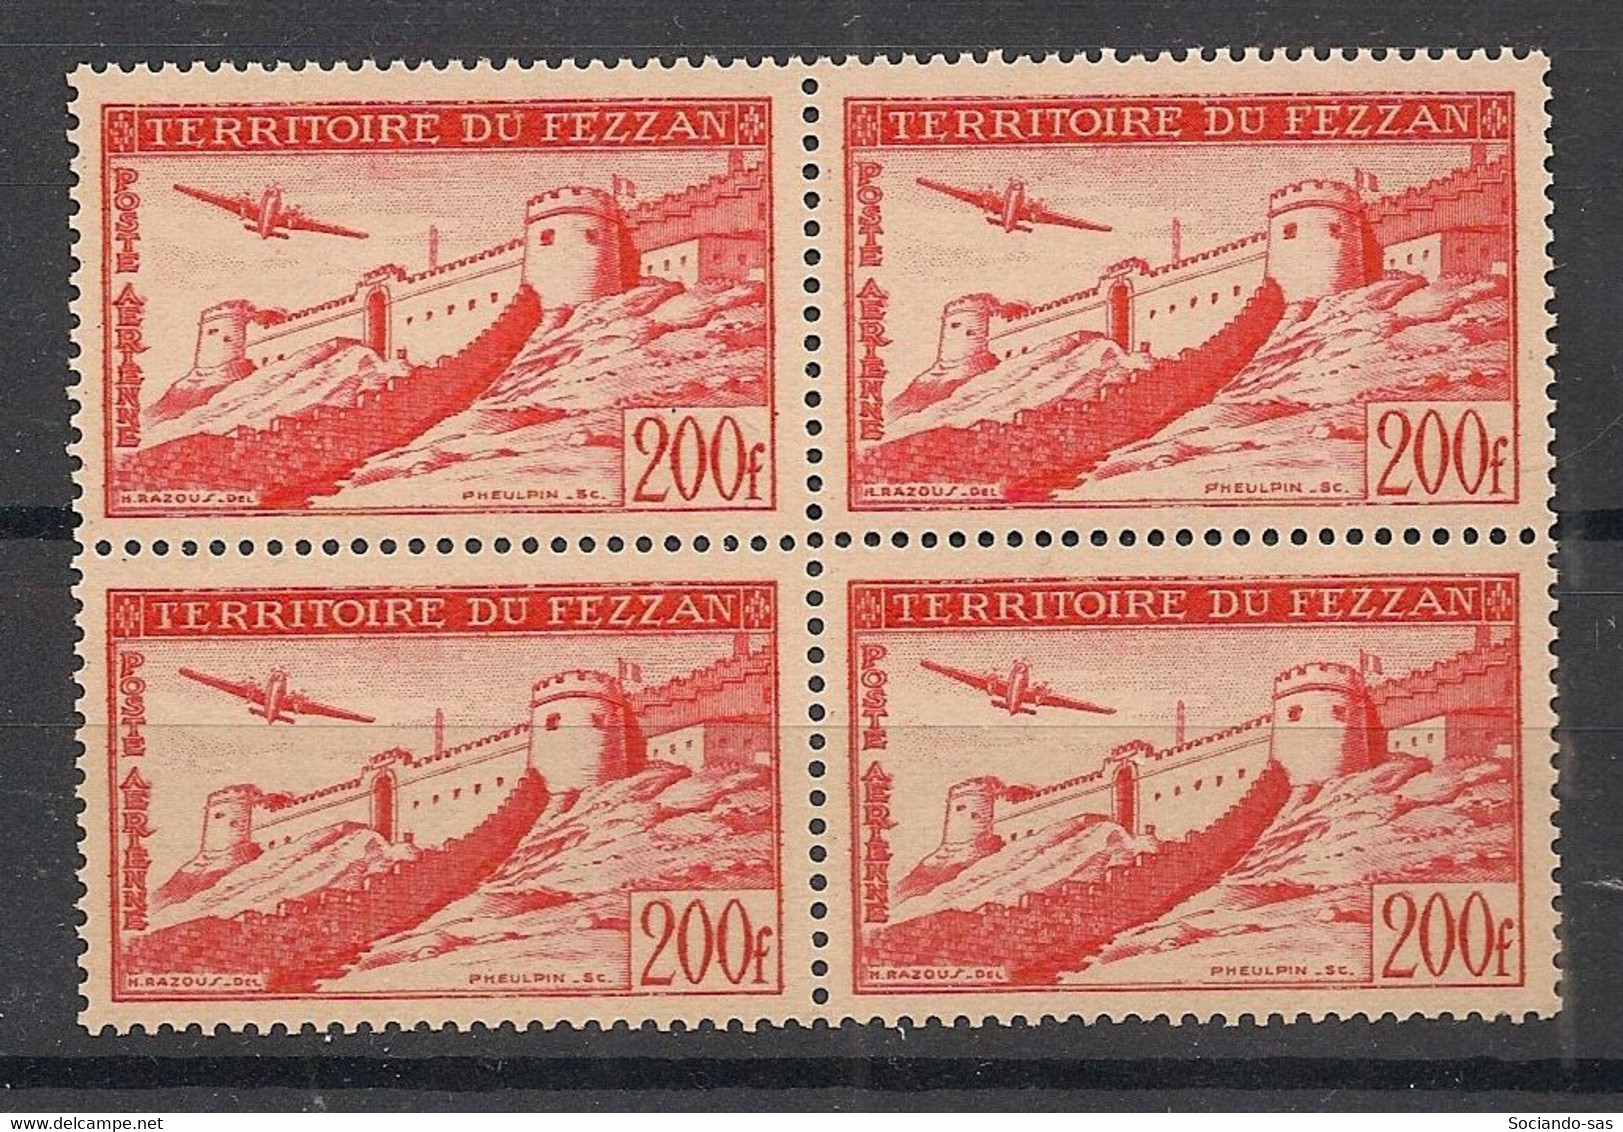 FEZZAN - 1951 - Poste Aérienne PA N°Yv. 7 - Sebha 200f Rouge - Bloc De 4 - Neuf Luxe ** / MNH / Postfrisch - Unused Stamps